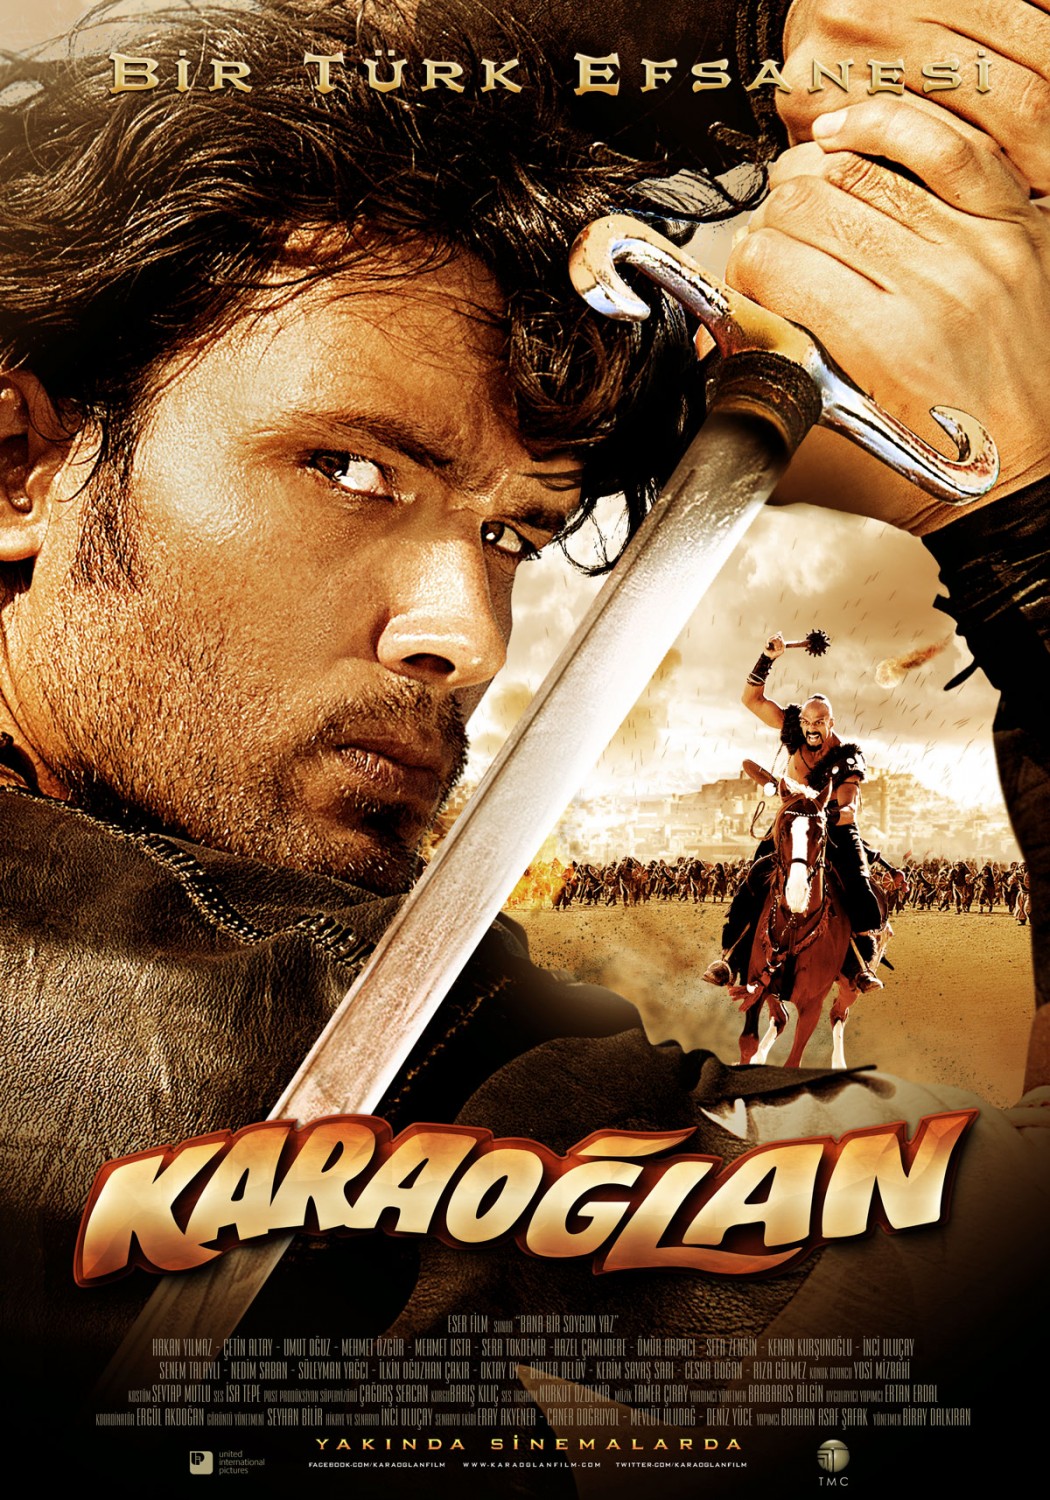 Extra Large Movie Poster Image for Karaoglan (#3 of 5)